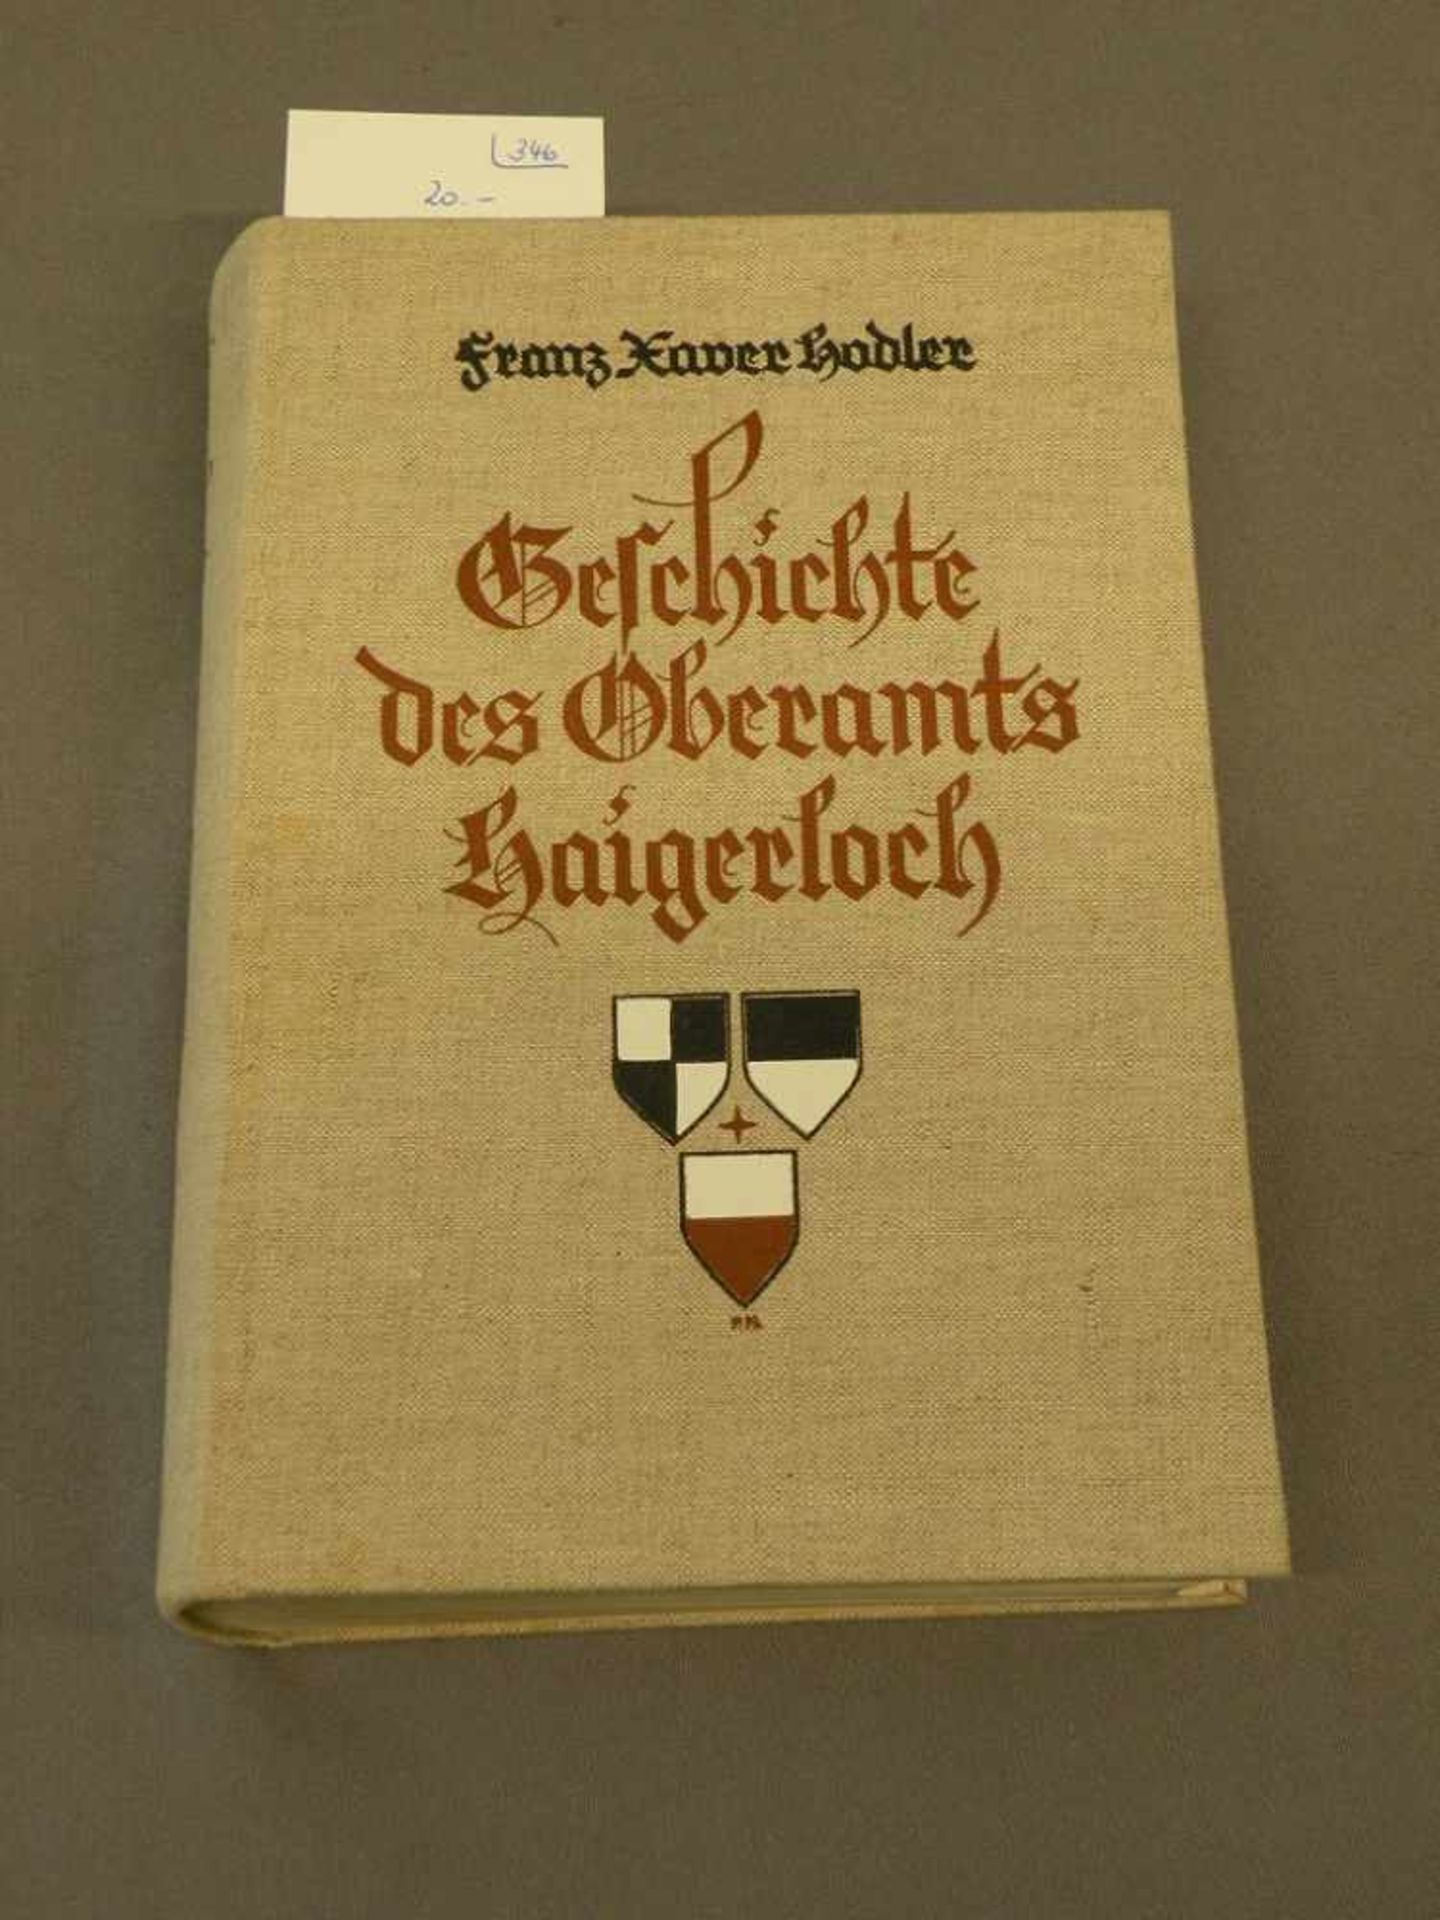 Buch "Geschichte des Oberamts Haigerloch", illustriert, Hechingen, 1928